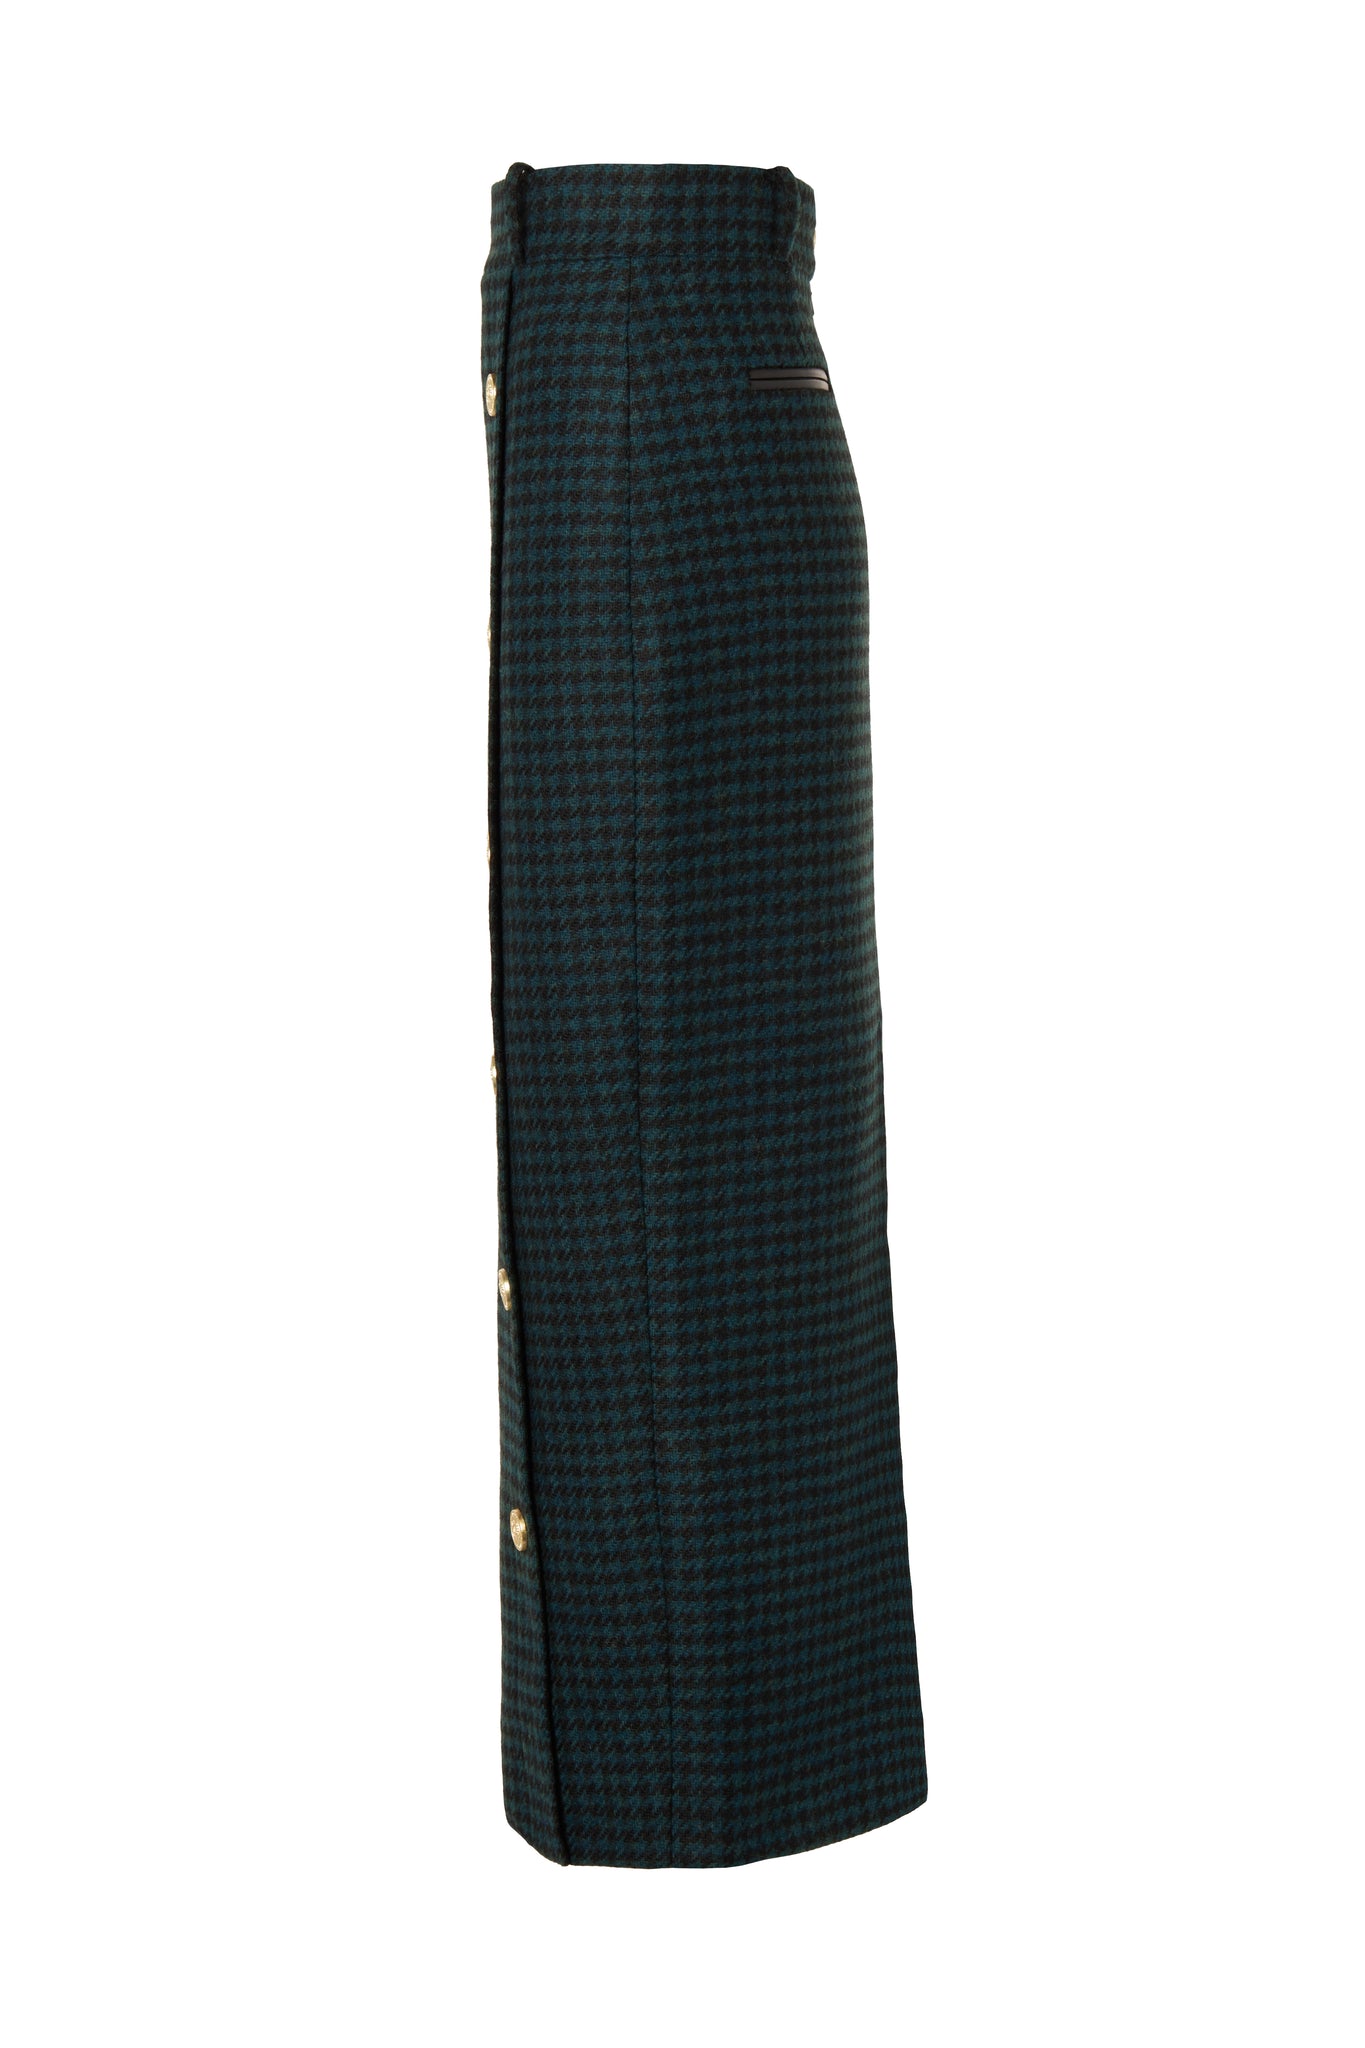 Knightsbridge Maxi Skirt (Emerald Houndstooth)